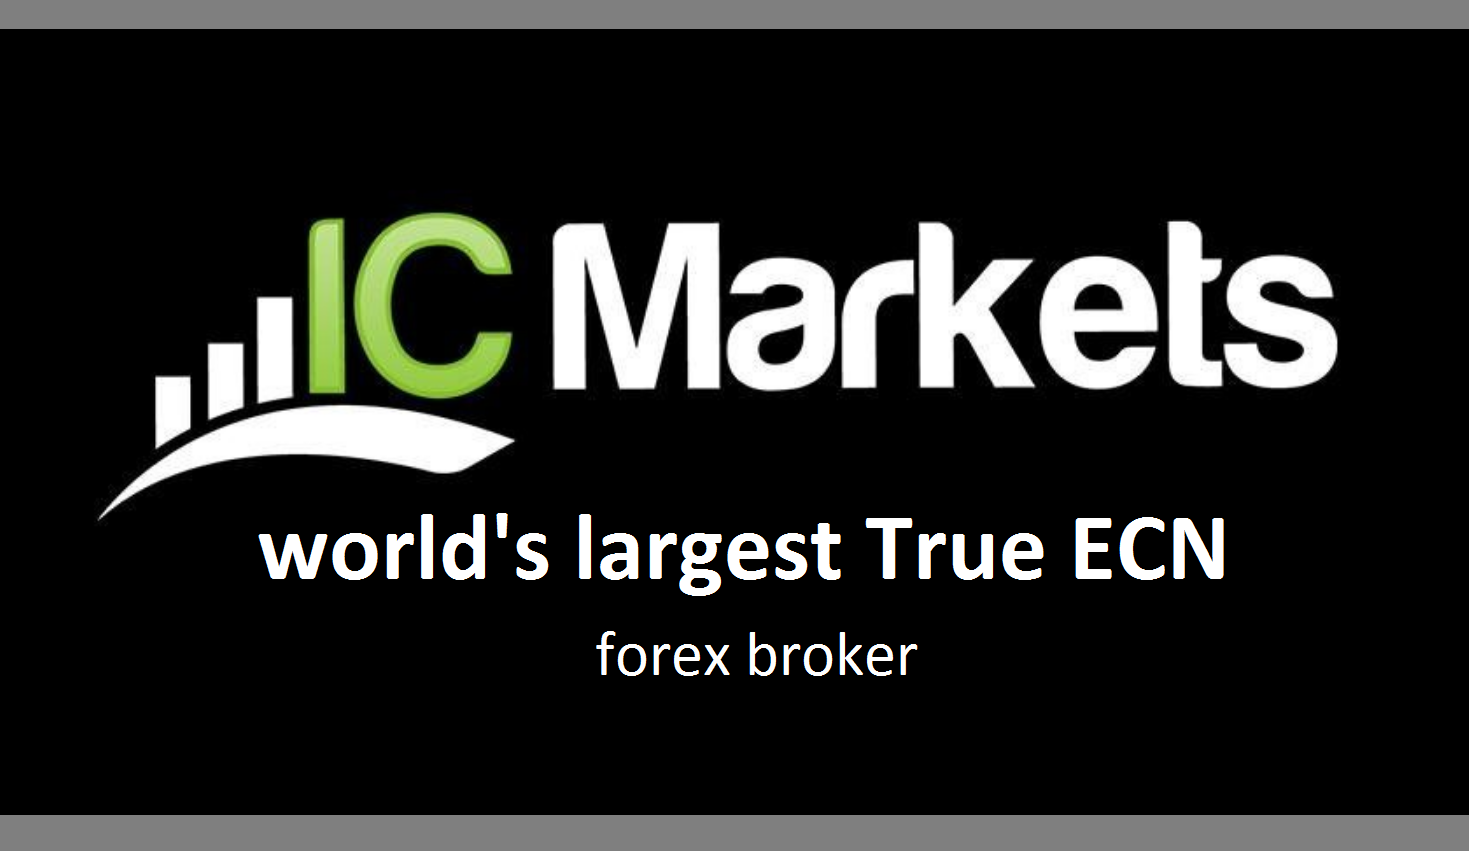 Icmarkets com. Ic Markets. Ic Markets logo. Forex логотип. Logotip ICMARKETS.